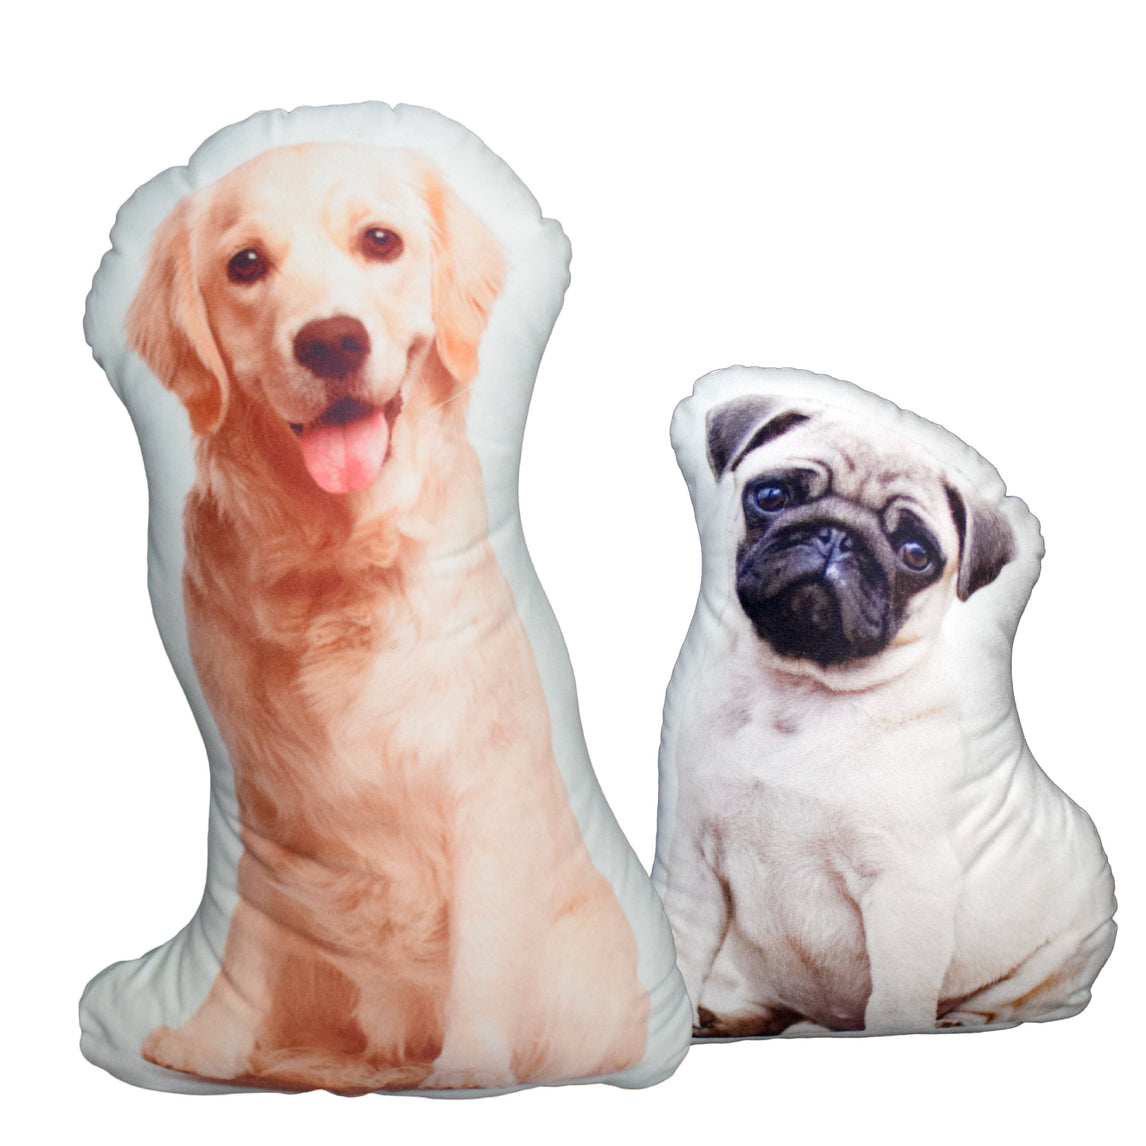 custom pillow with dog face